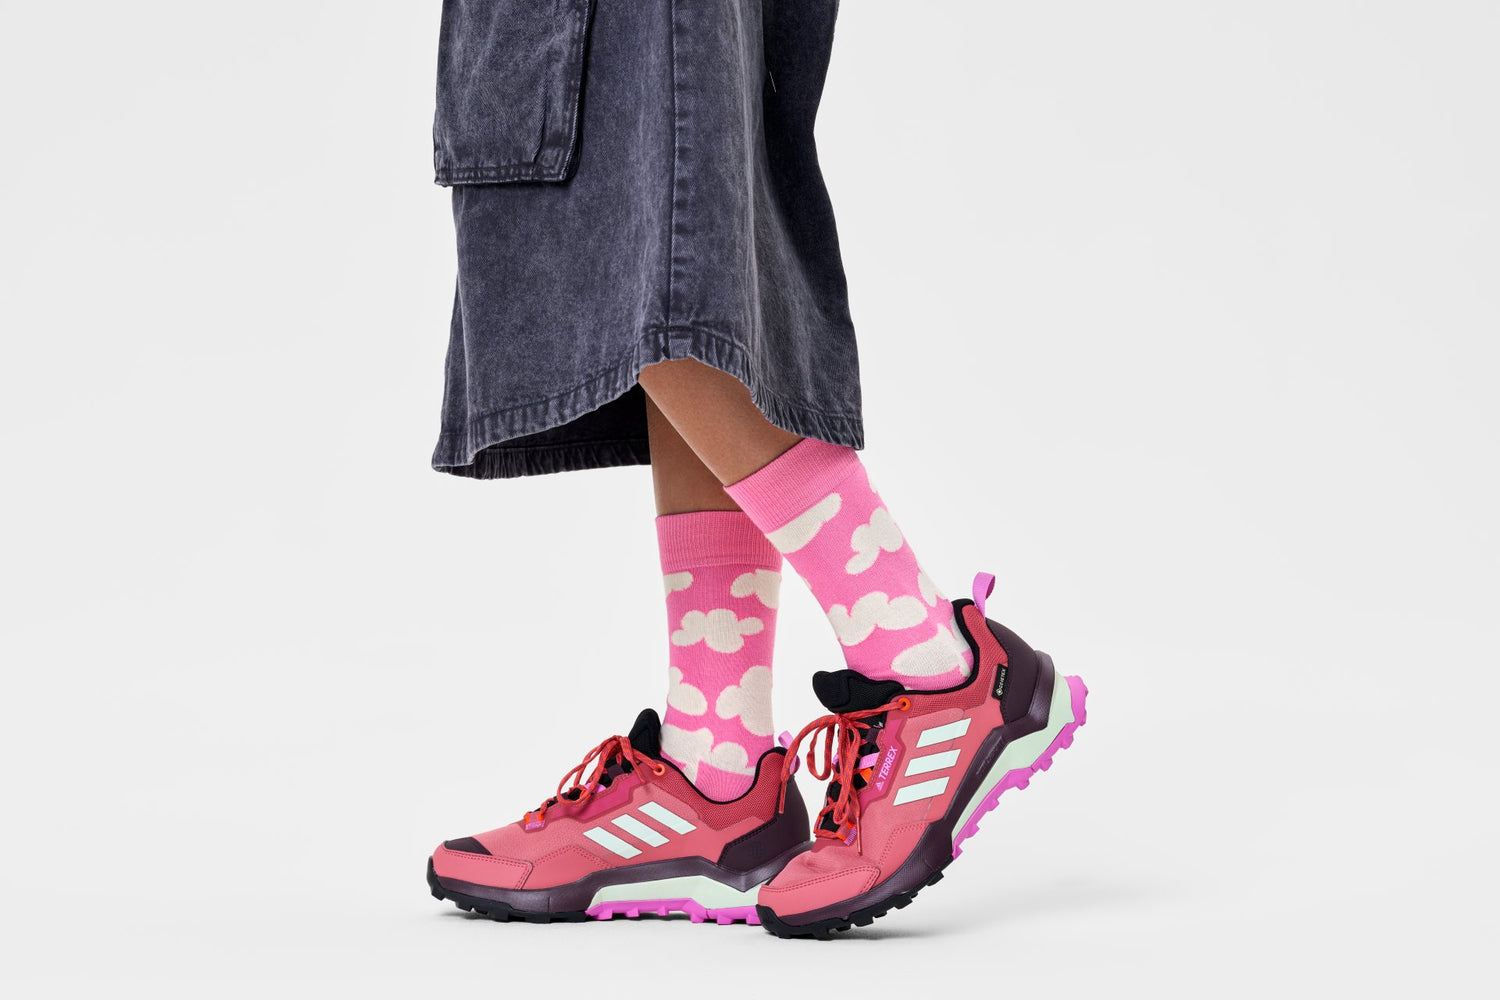 Happy Socks - Cloudy Sock Pink